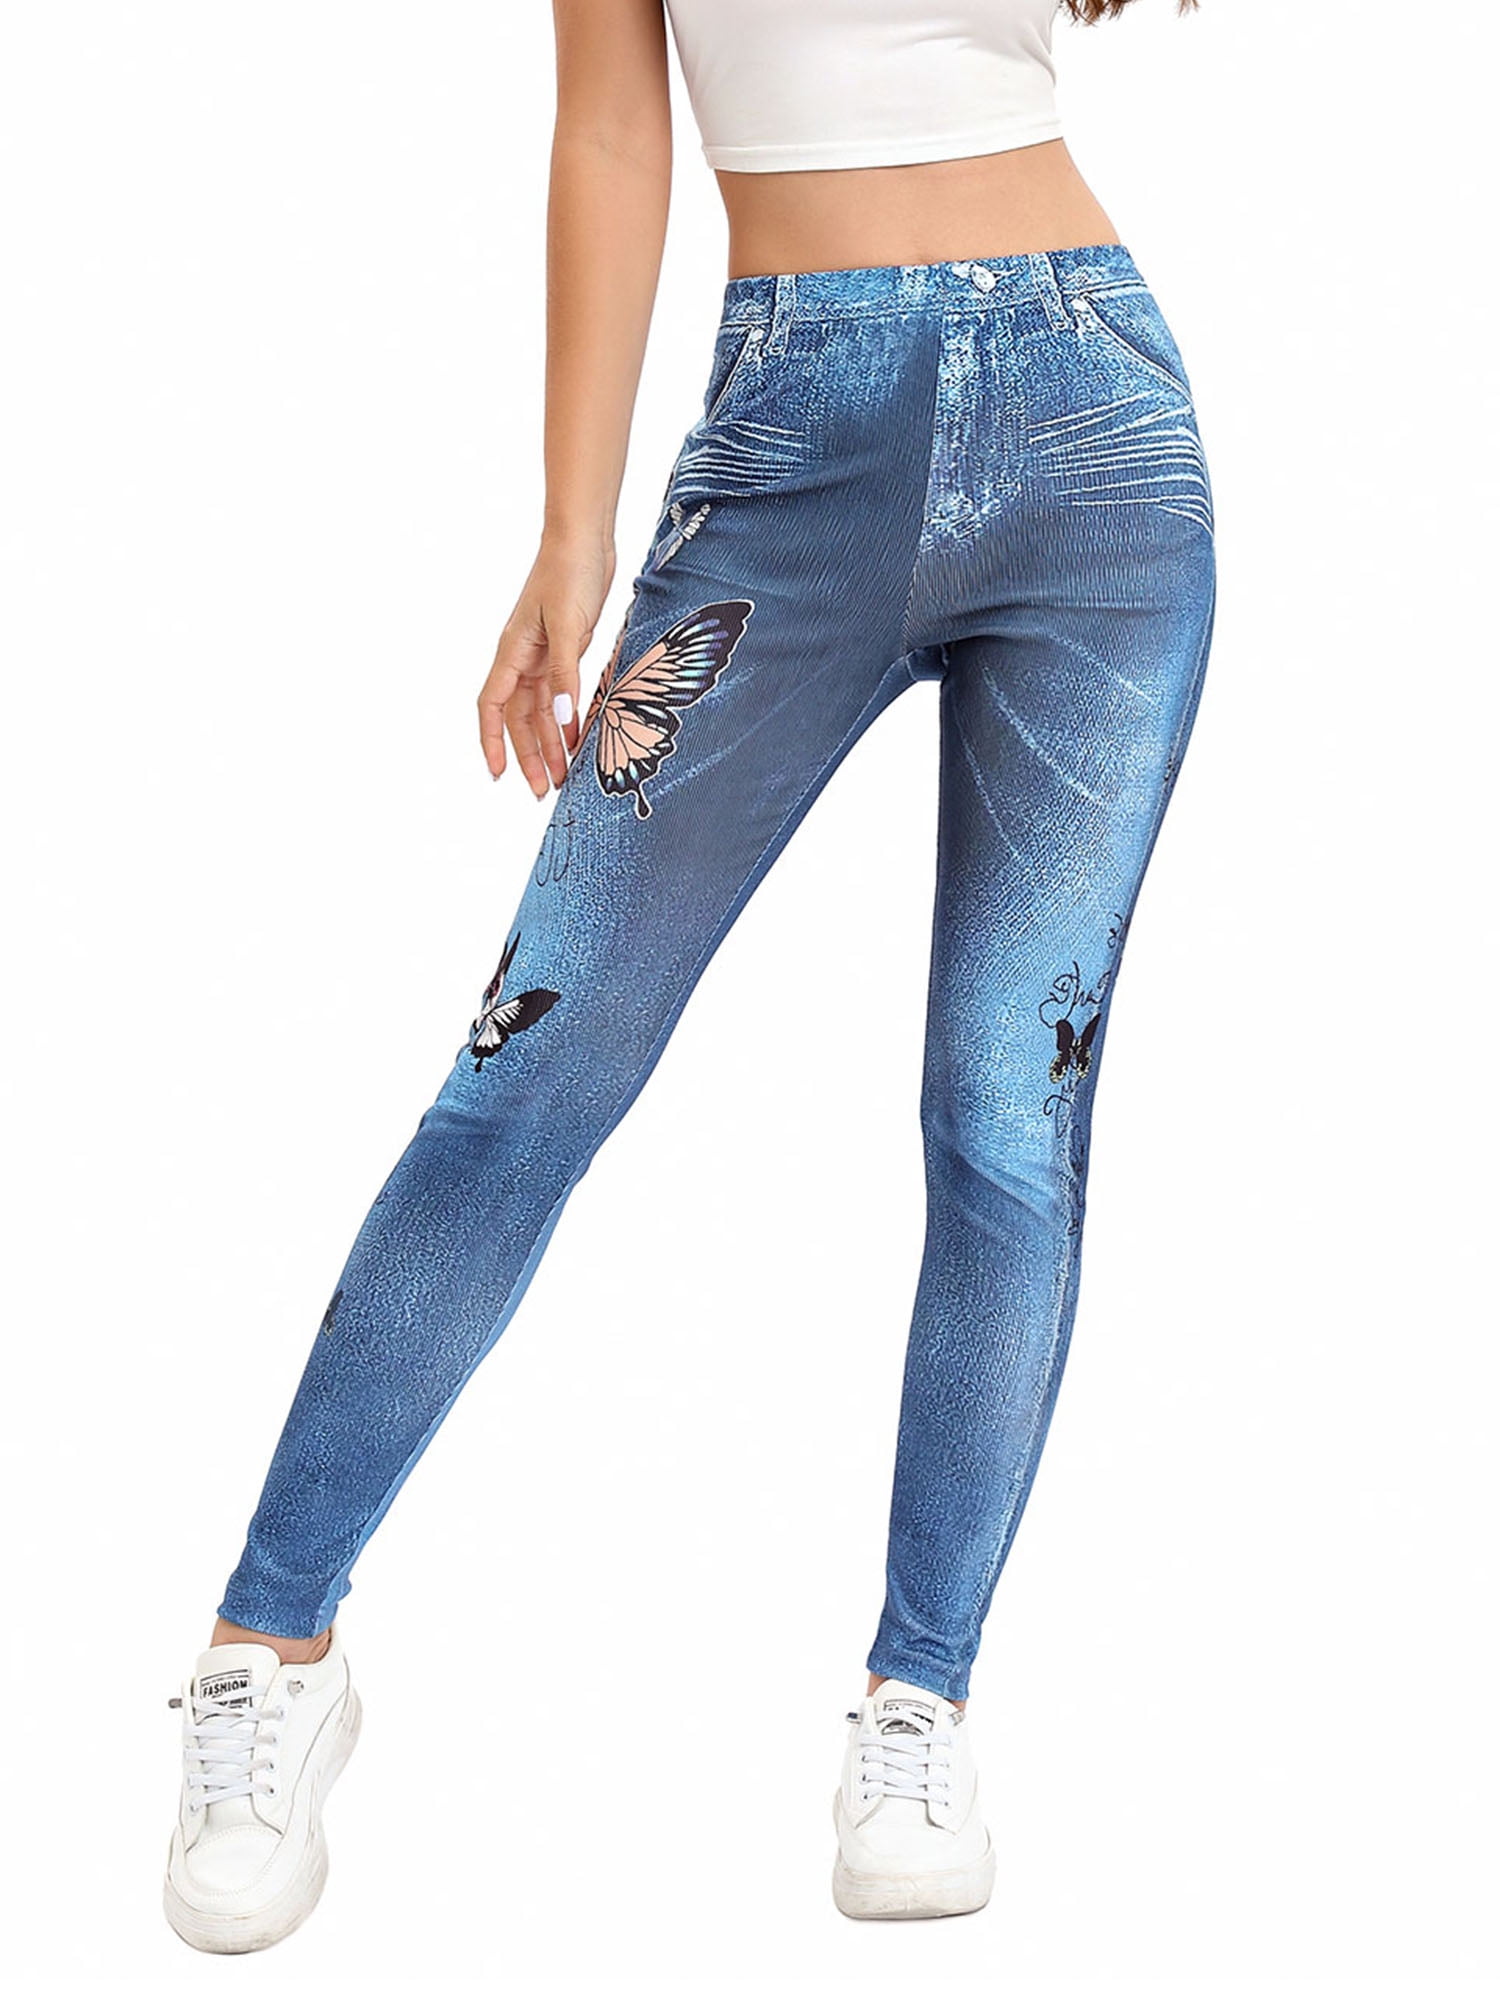 Glonme Ladies Fake Jeans Seamless Leggings Tummy Control Faux